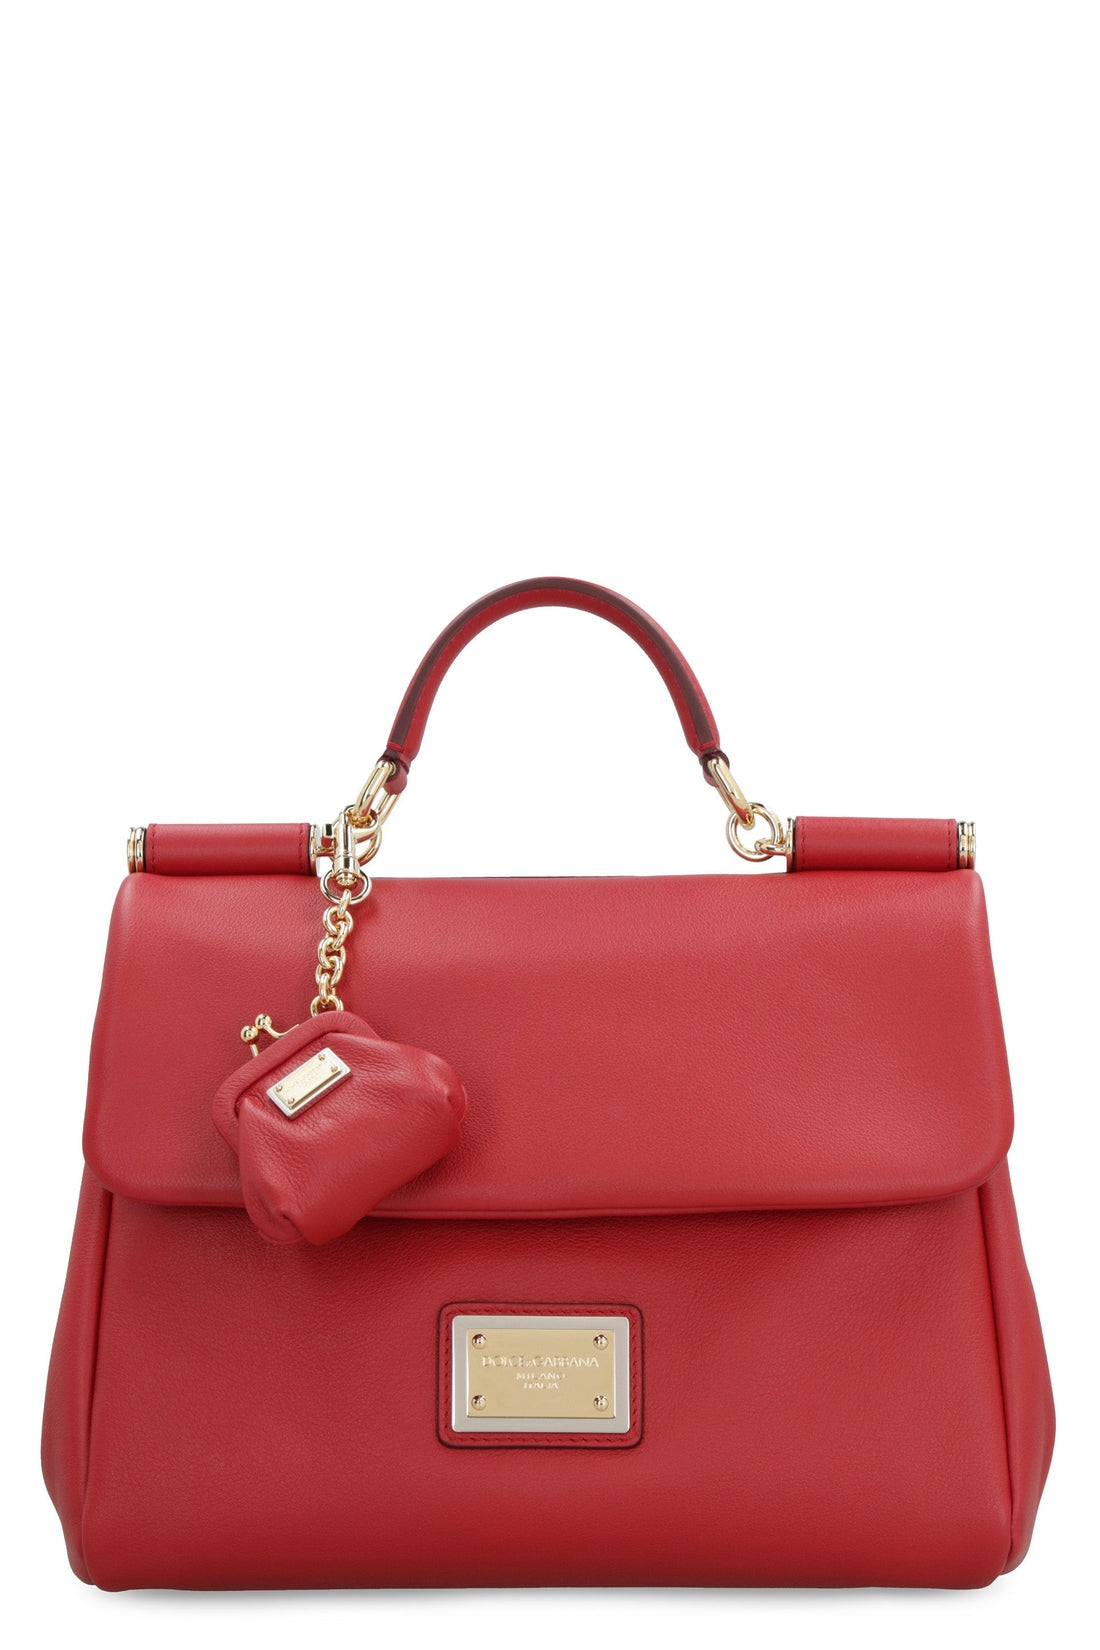 Dolce & Gabbana-OUTLET-SALE-Sicily Soft leather handbag-ARCHIVIST